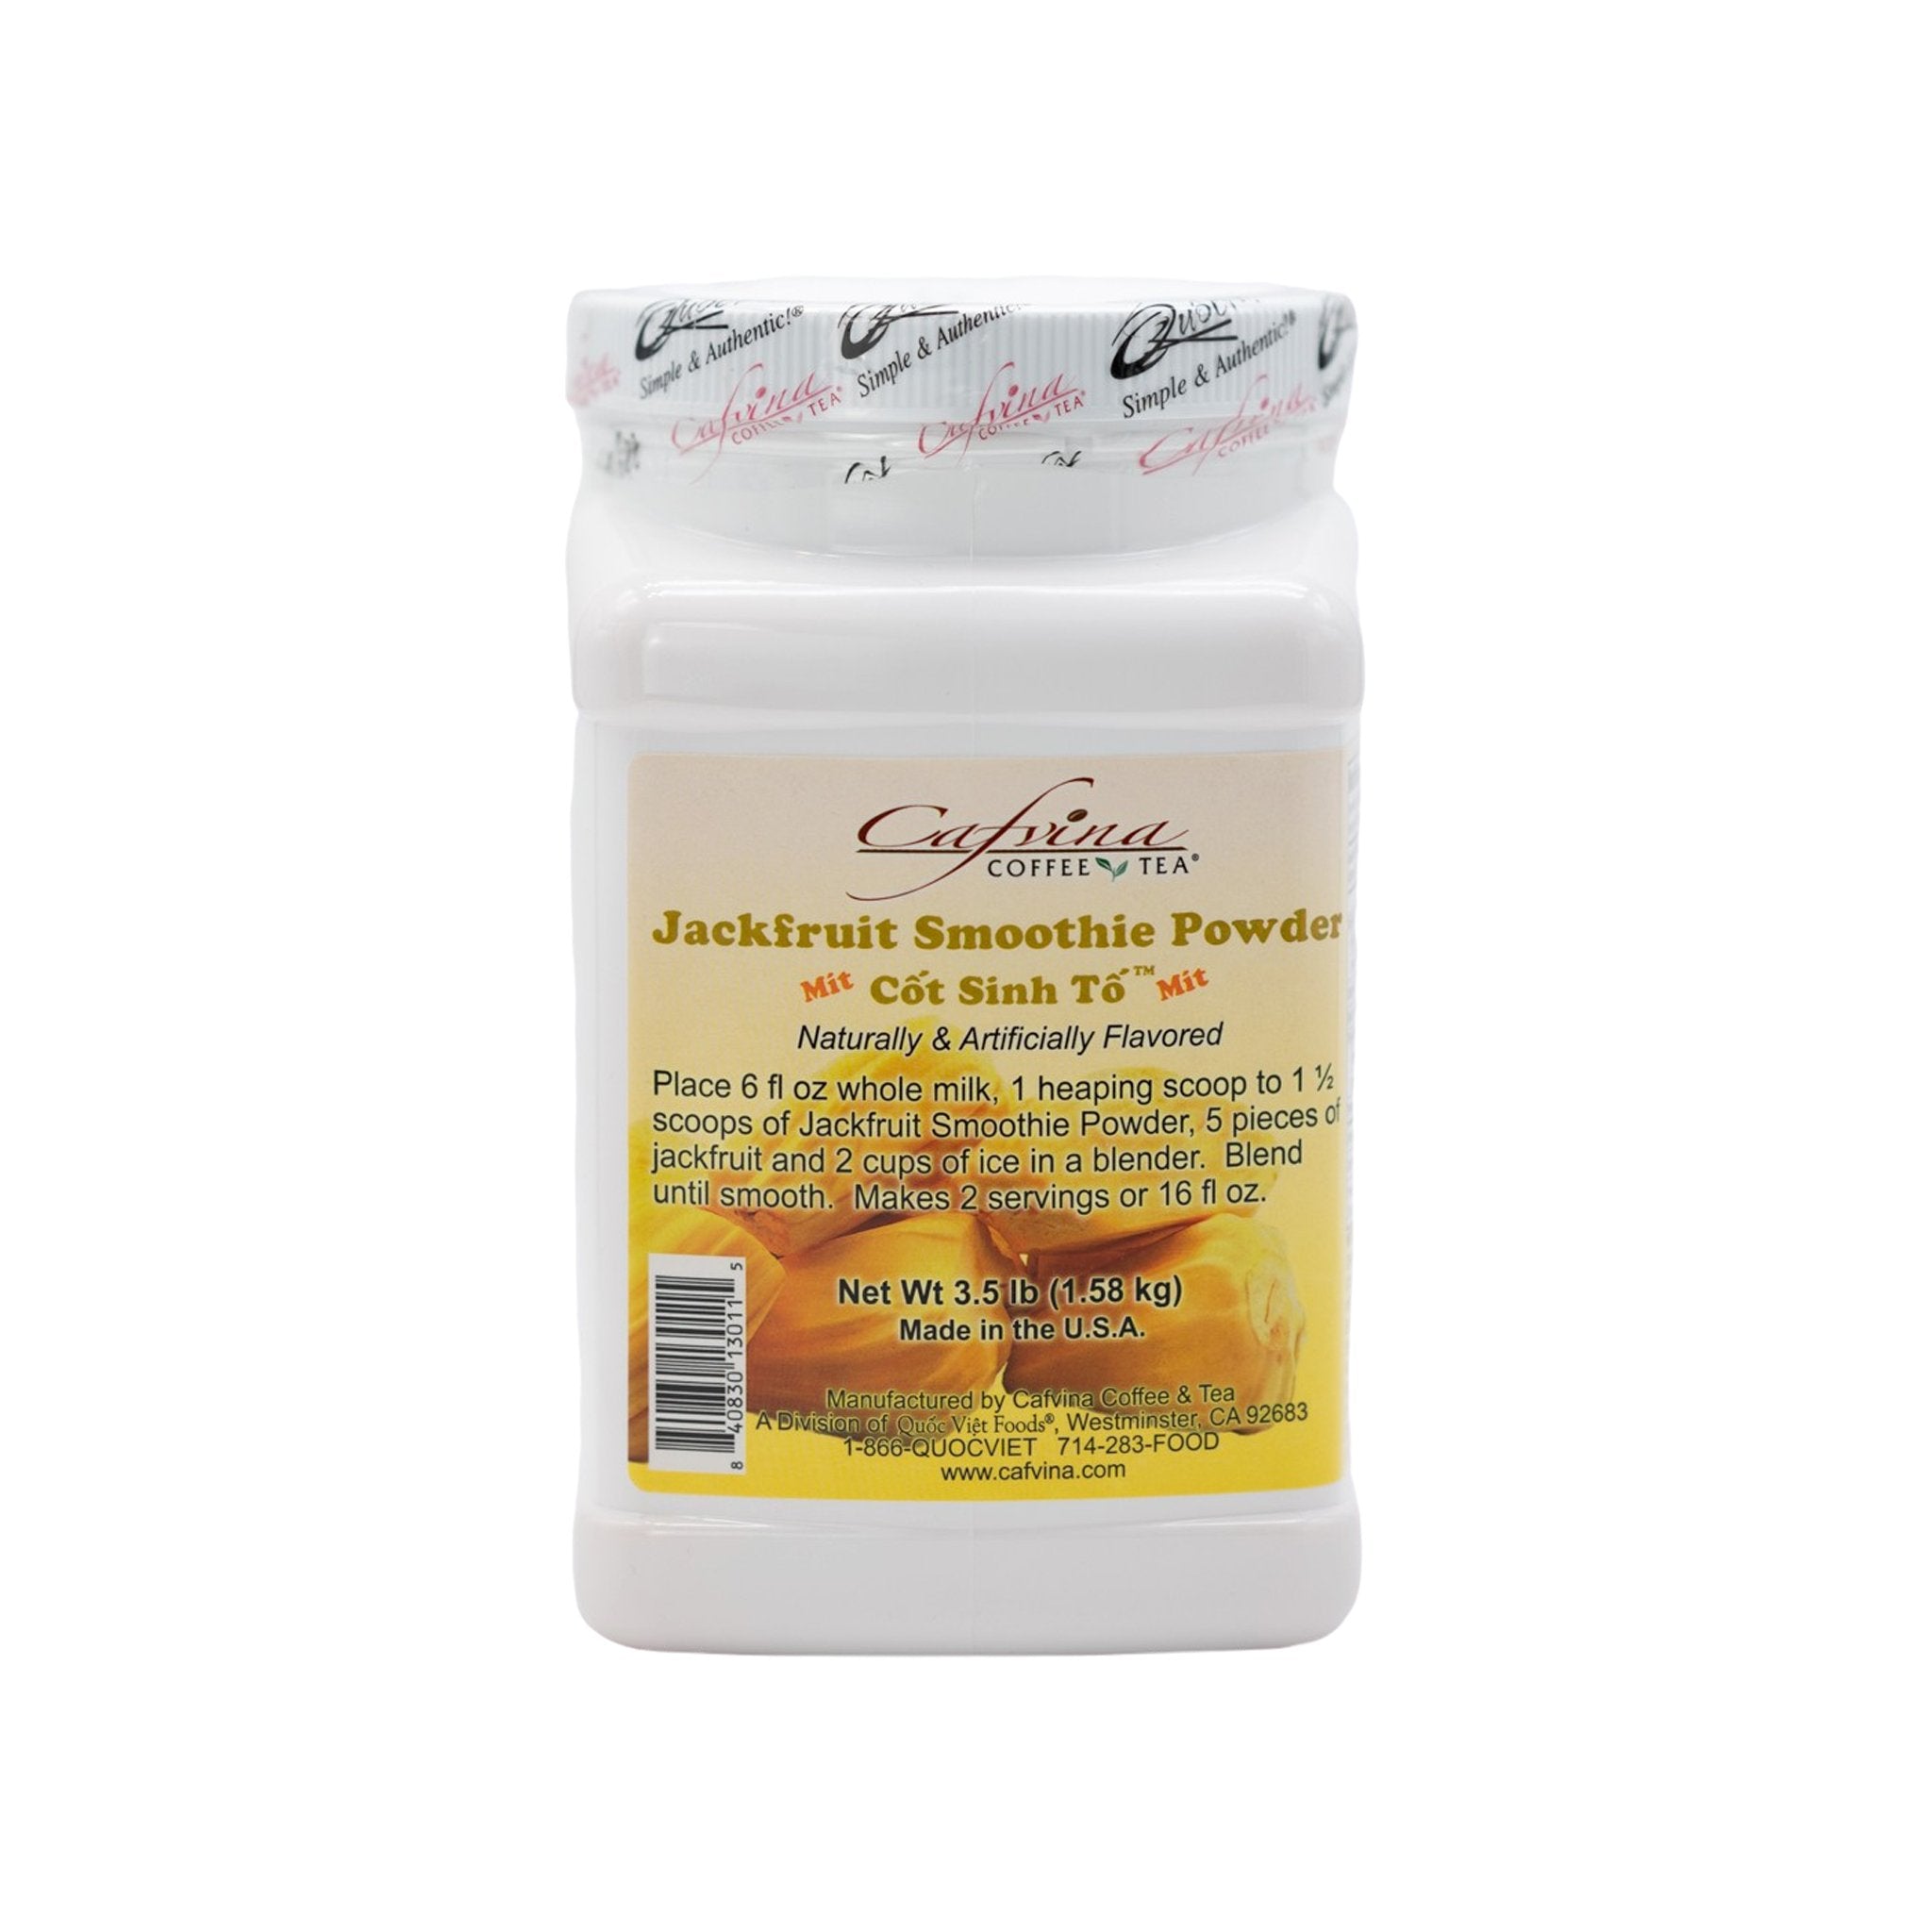 Jackfruit Smoothie Powder